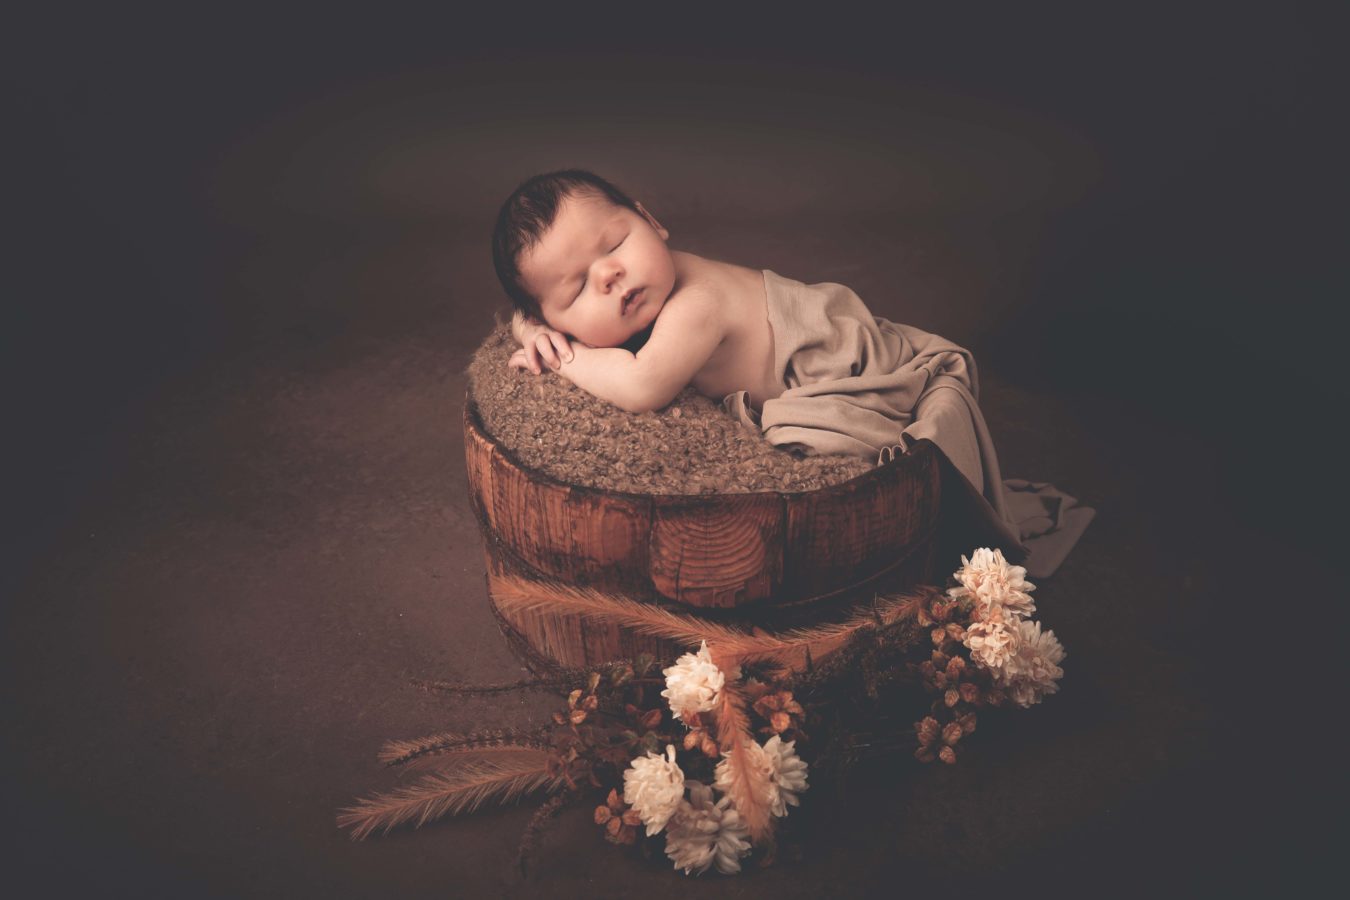 Babybilder
Newbornbilder
Newbornfotografie